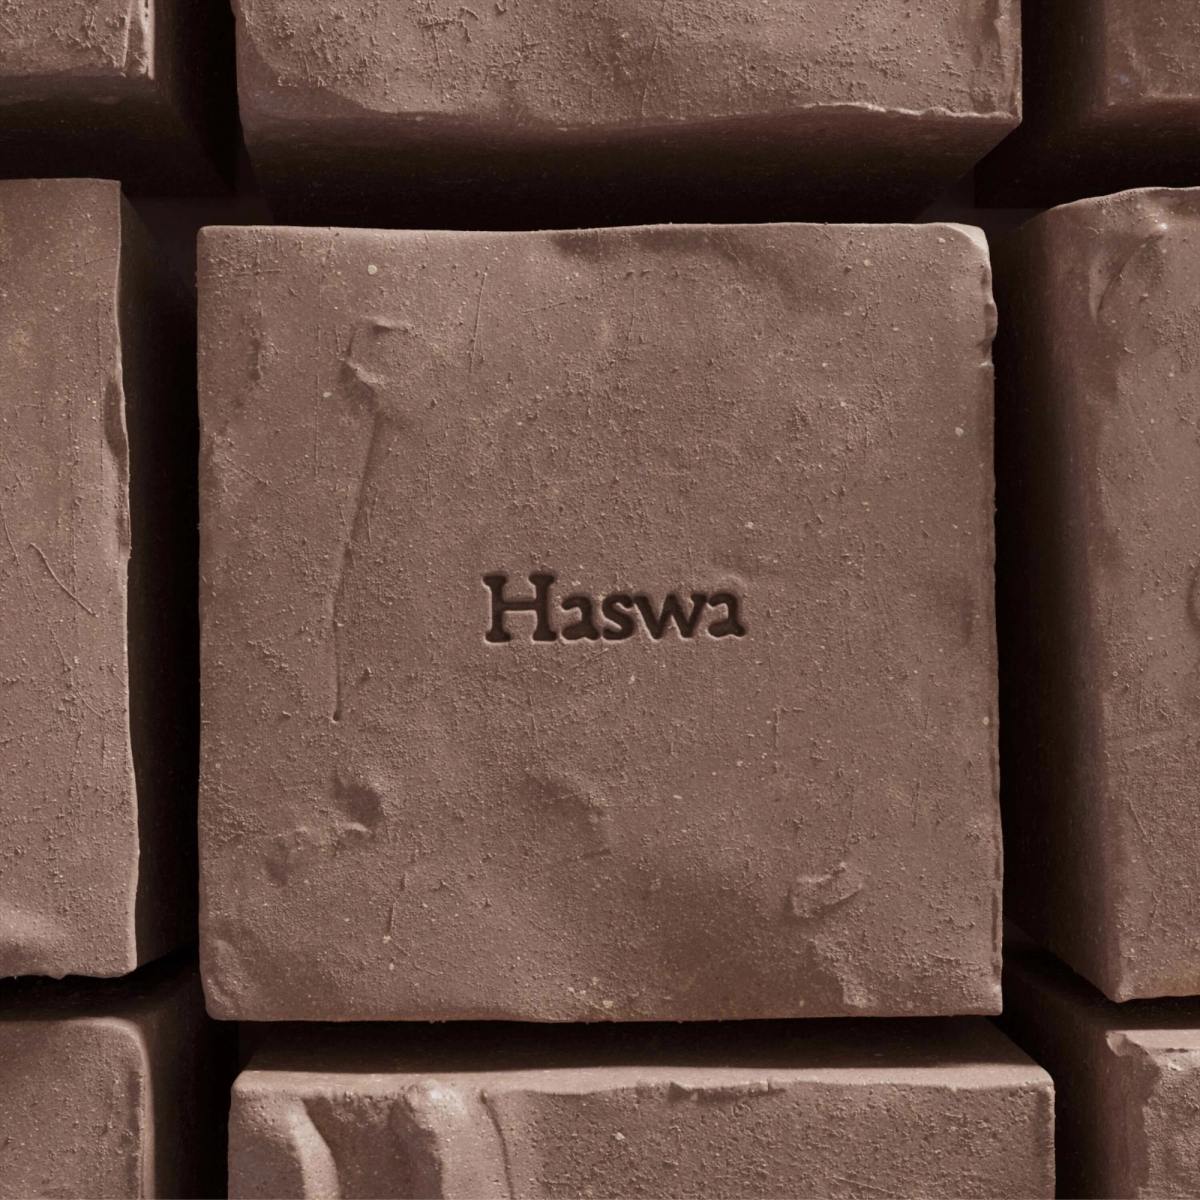 Haswa